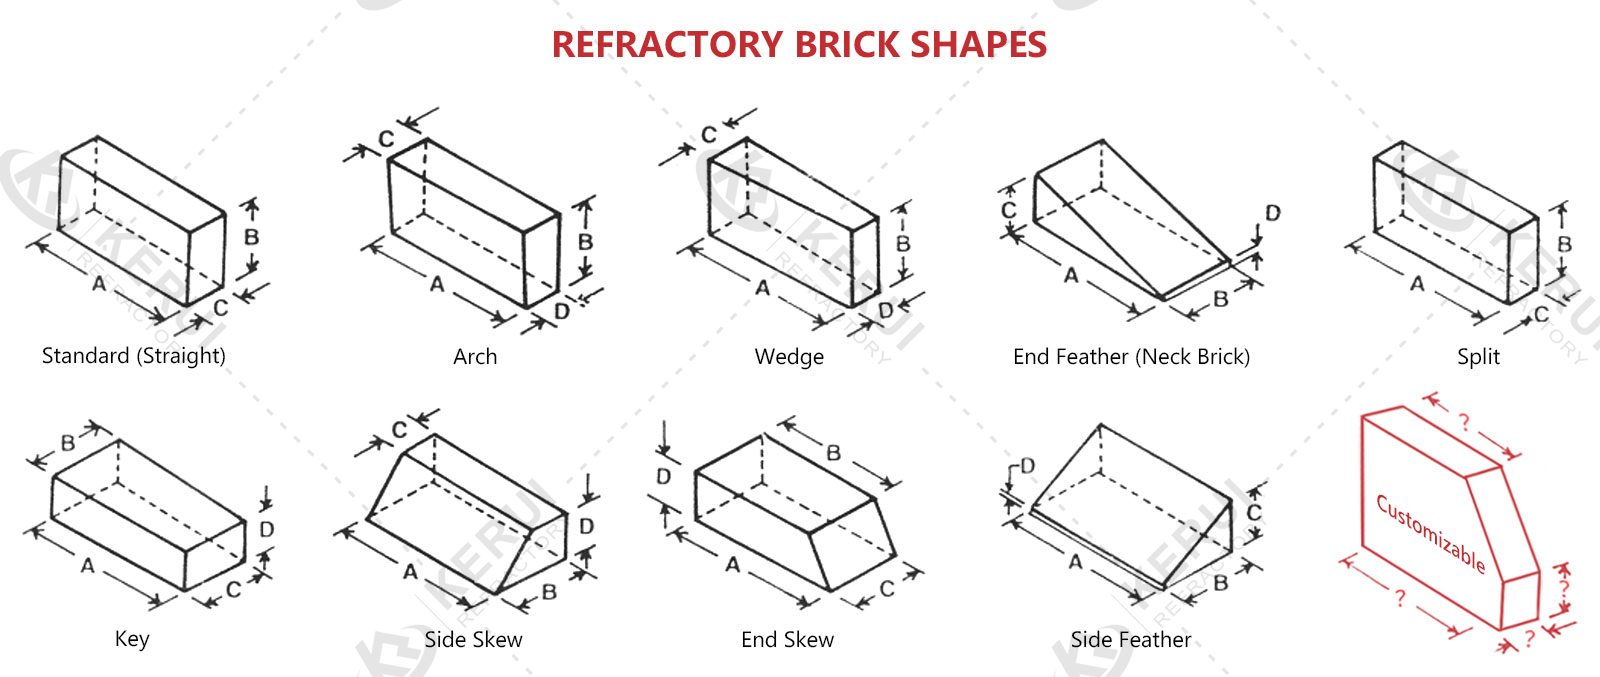 Size of Refractory Bricks